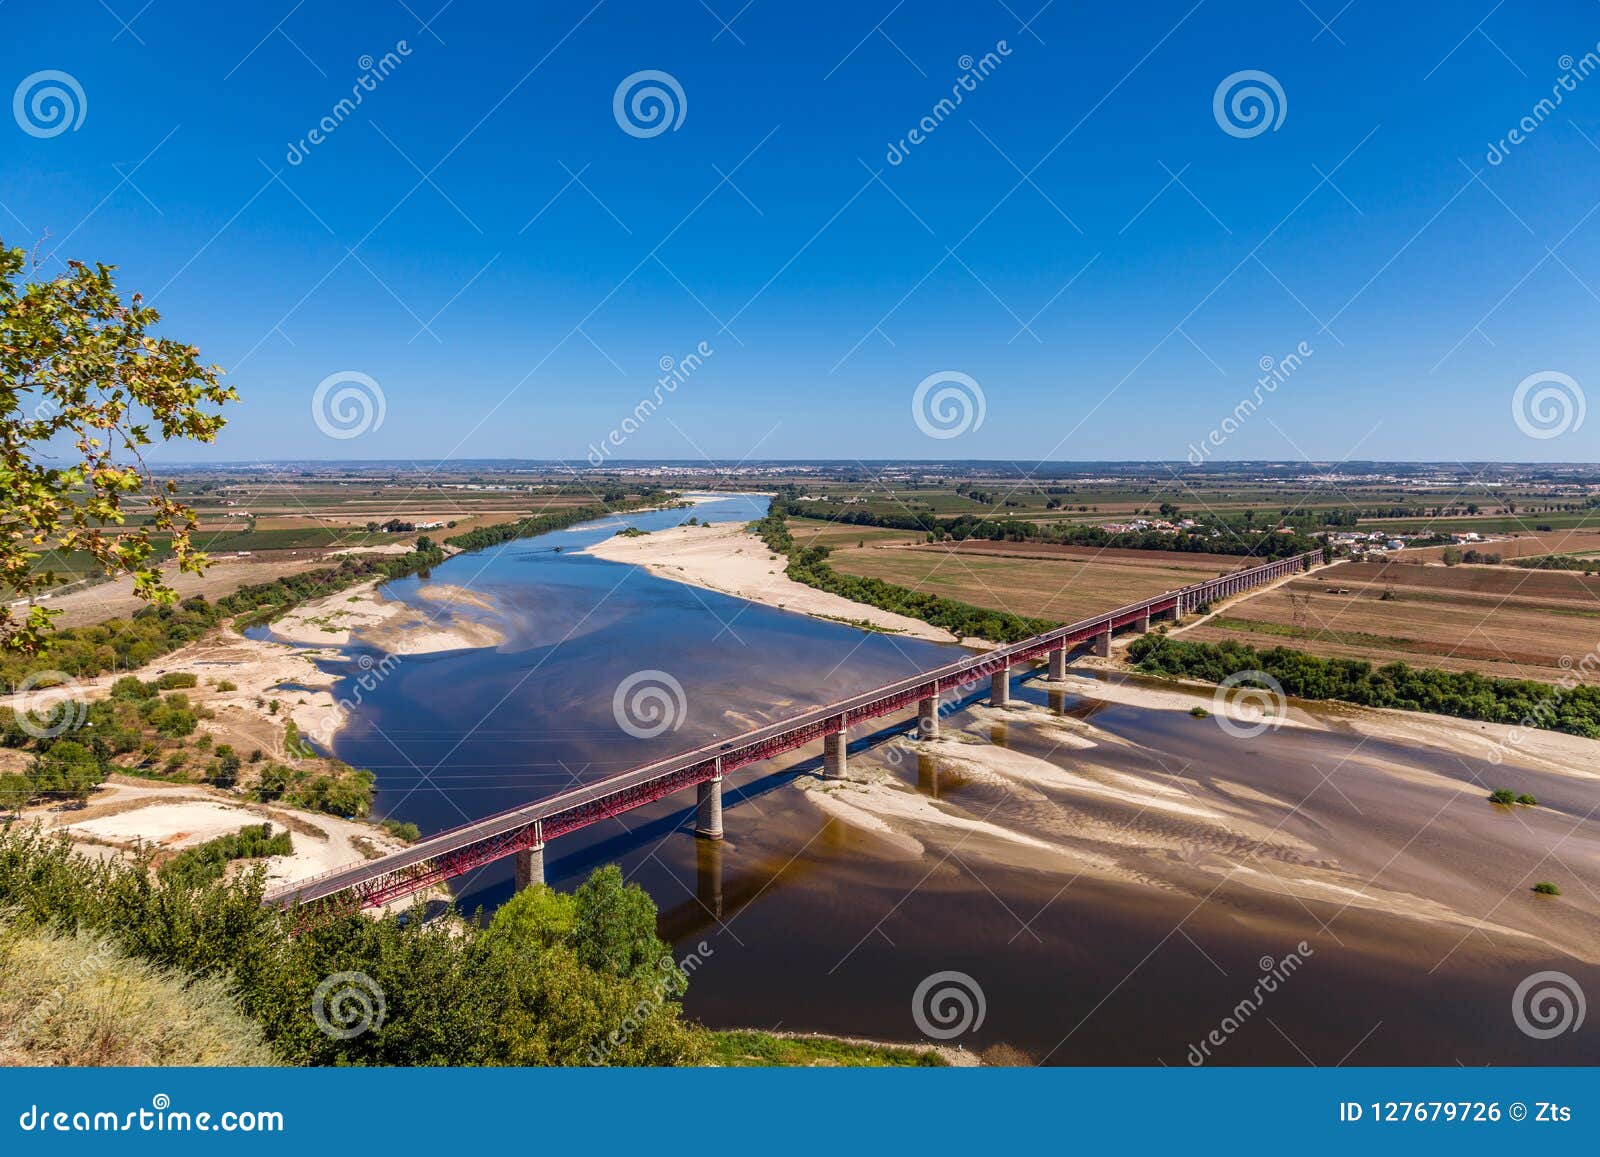 santarem, portugal. ponte dom luis i bridge, tagus river and leziria